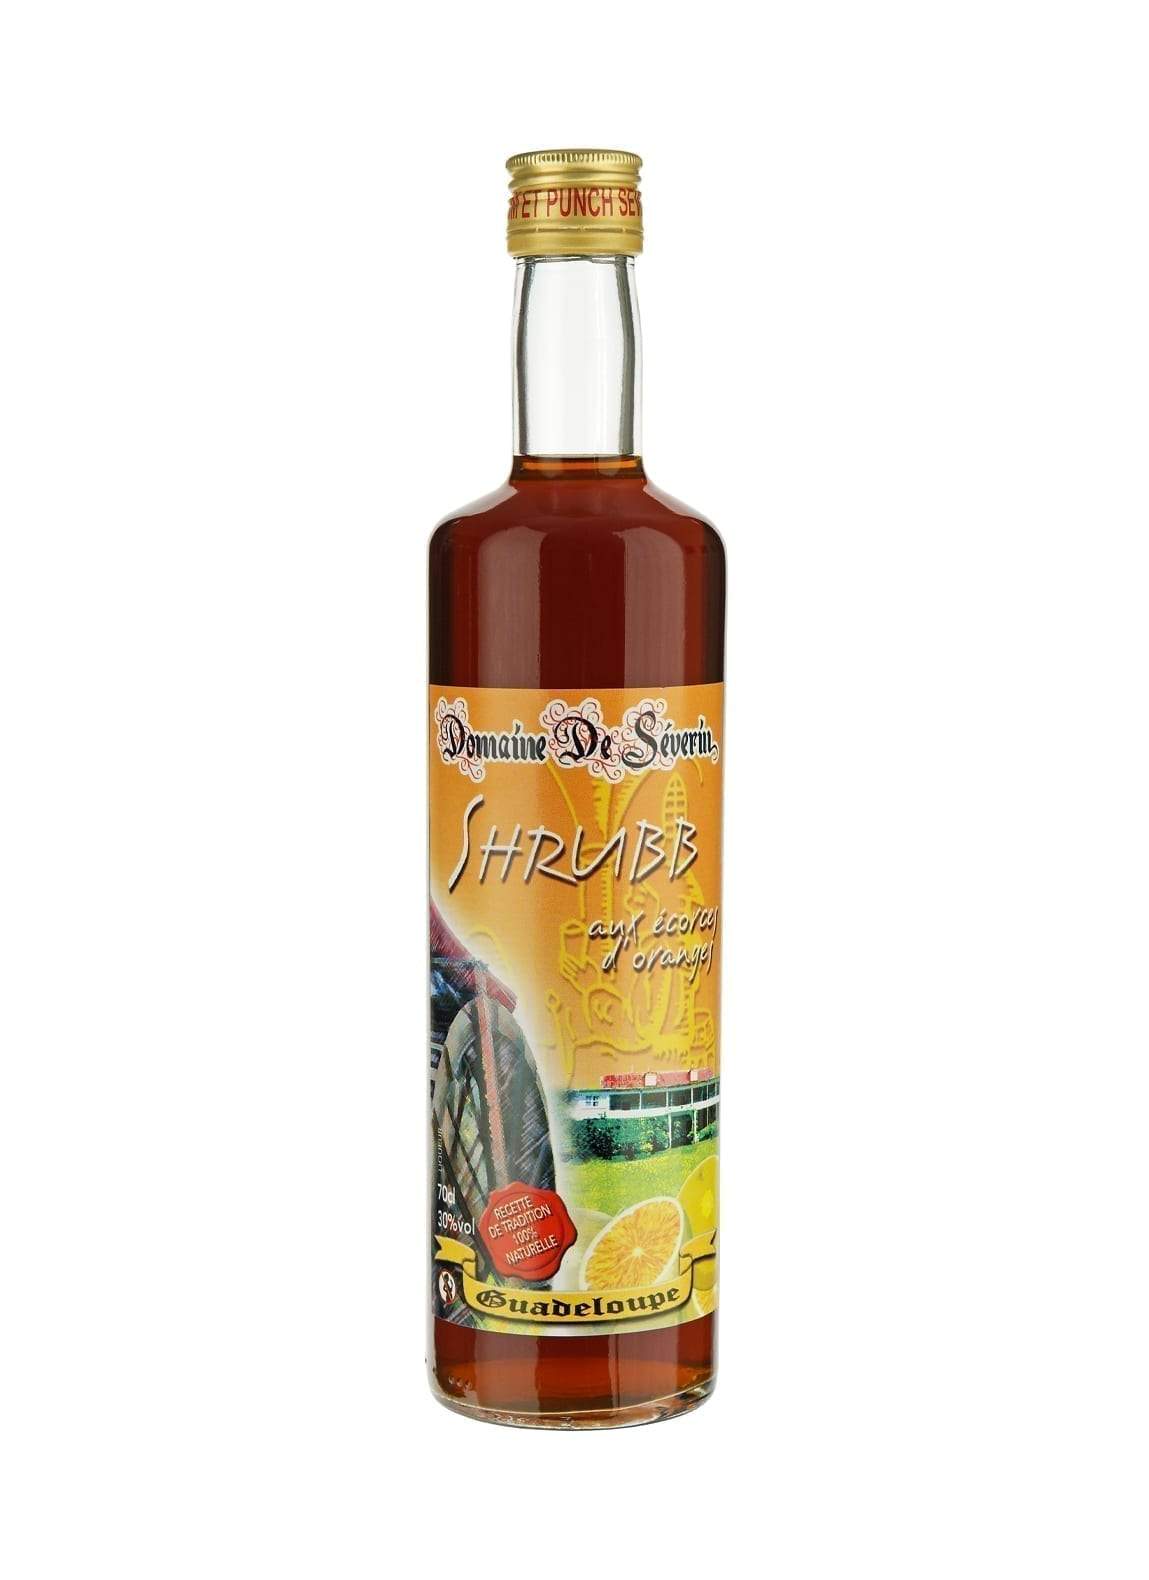 Severin Rum Punch 'Shrubb' Liqueur 30% 700ml | Rum | Shop online at Spirits of France